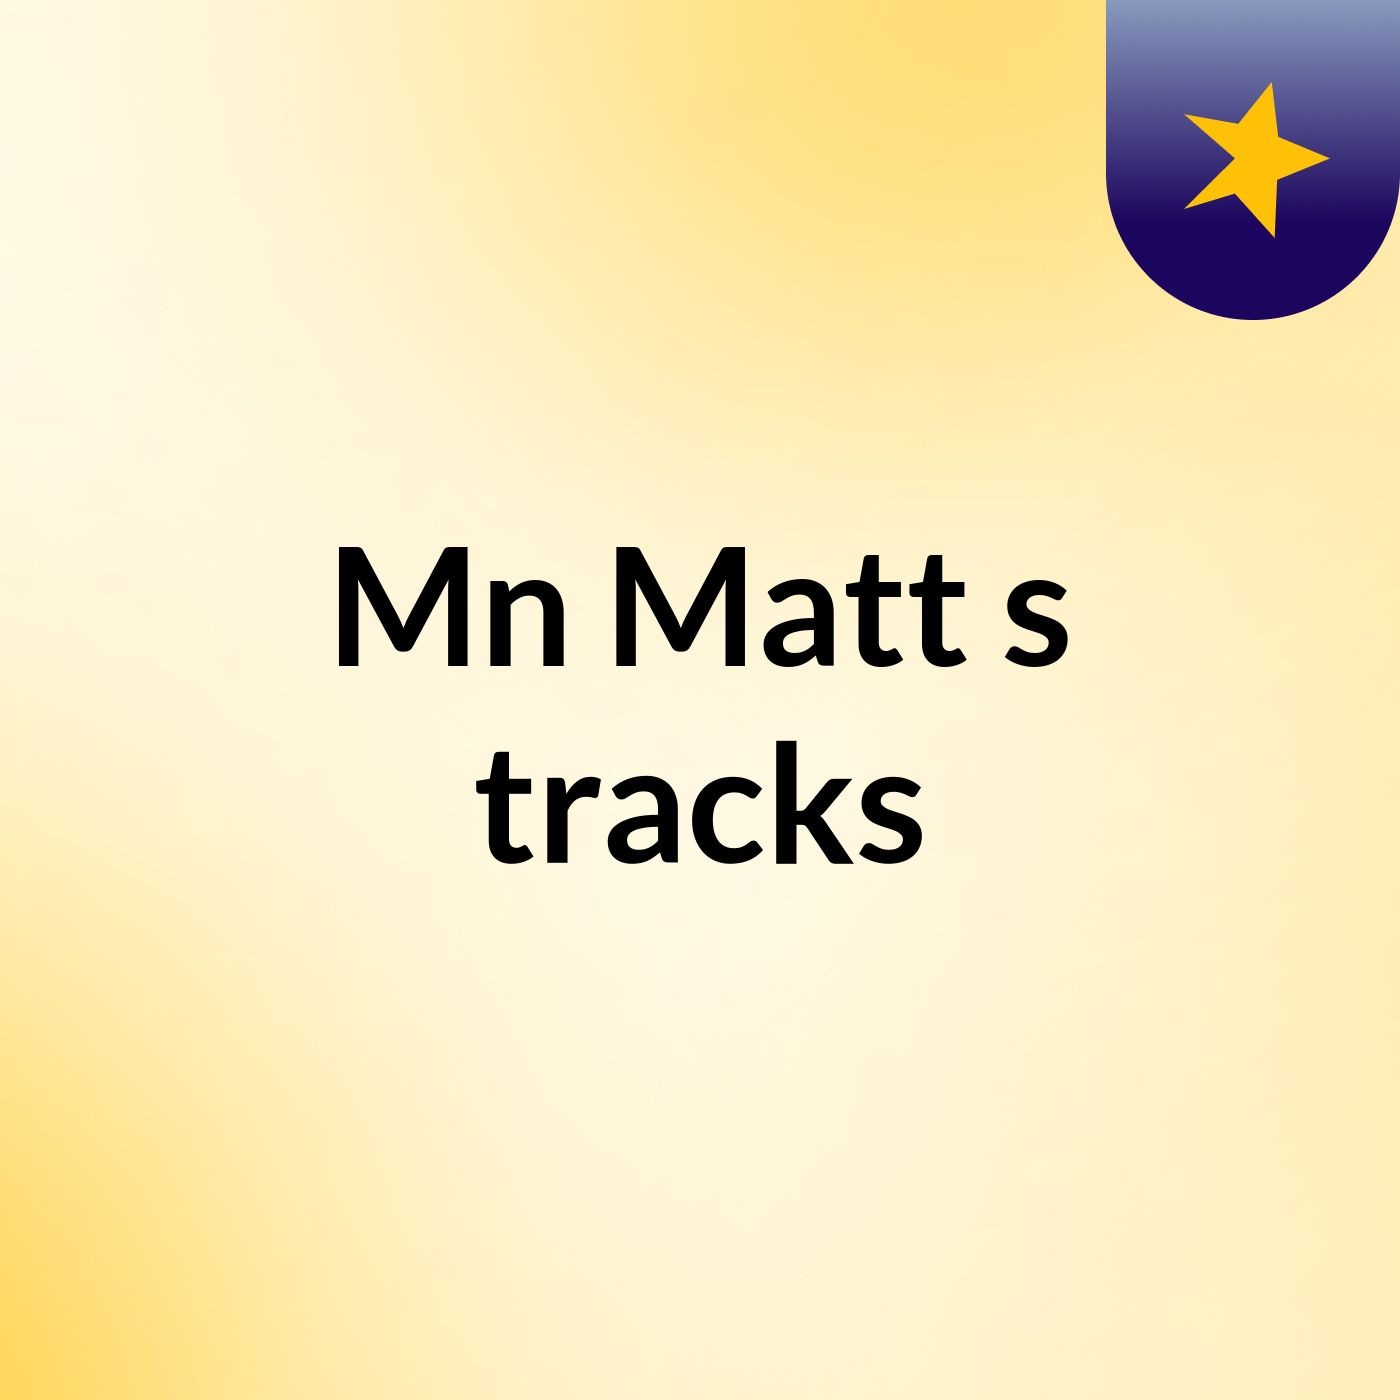 Mn Matt's tracks